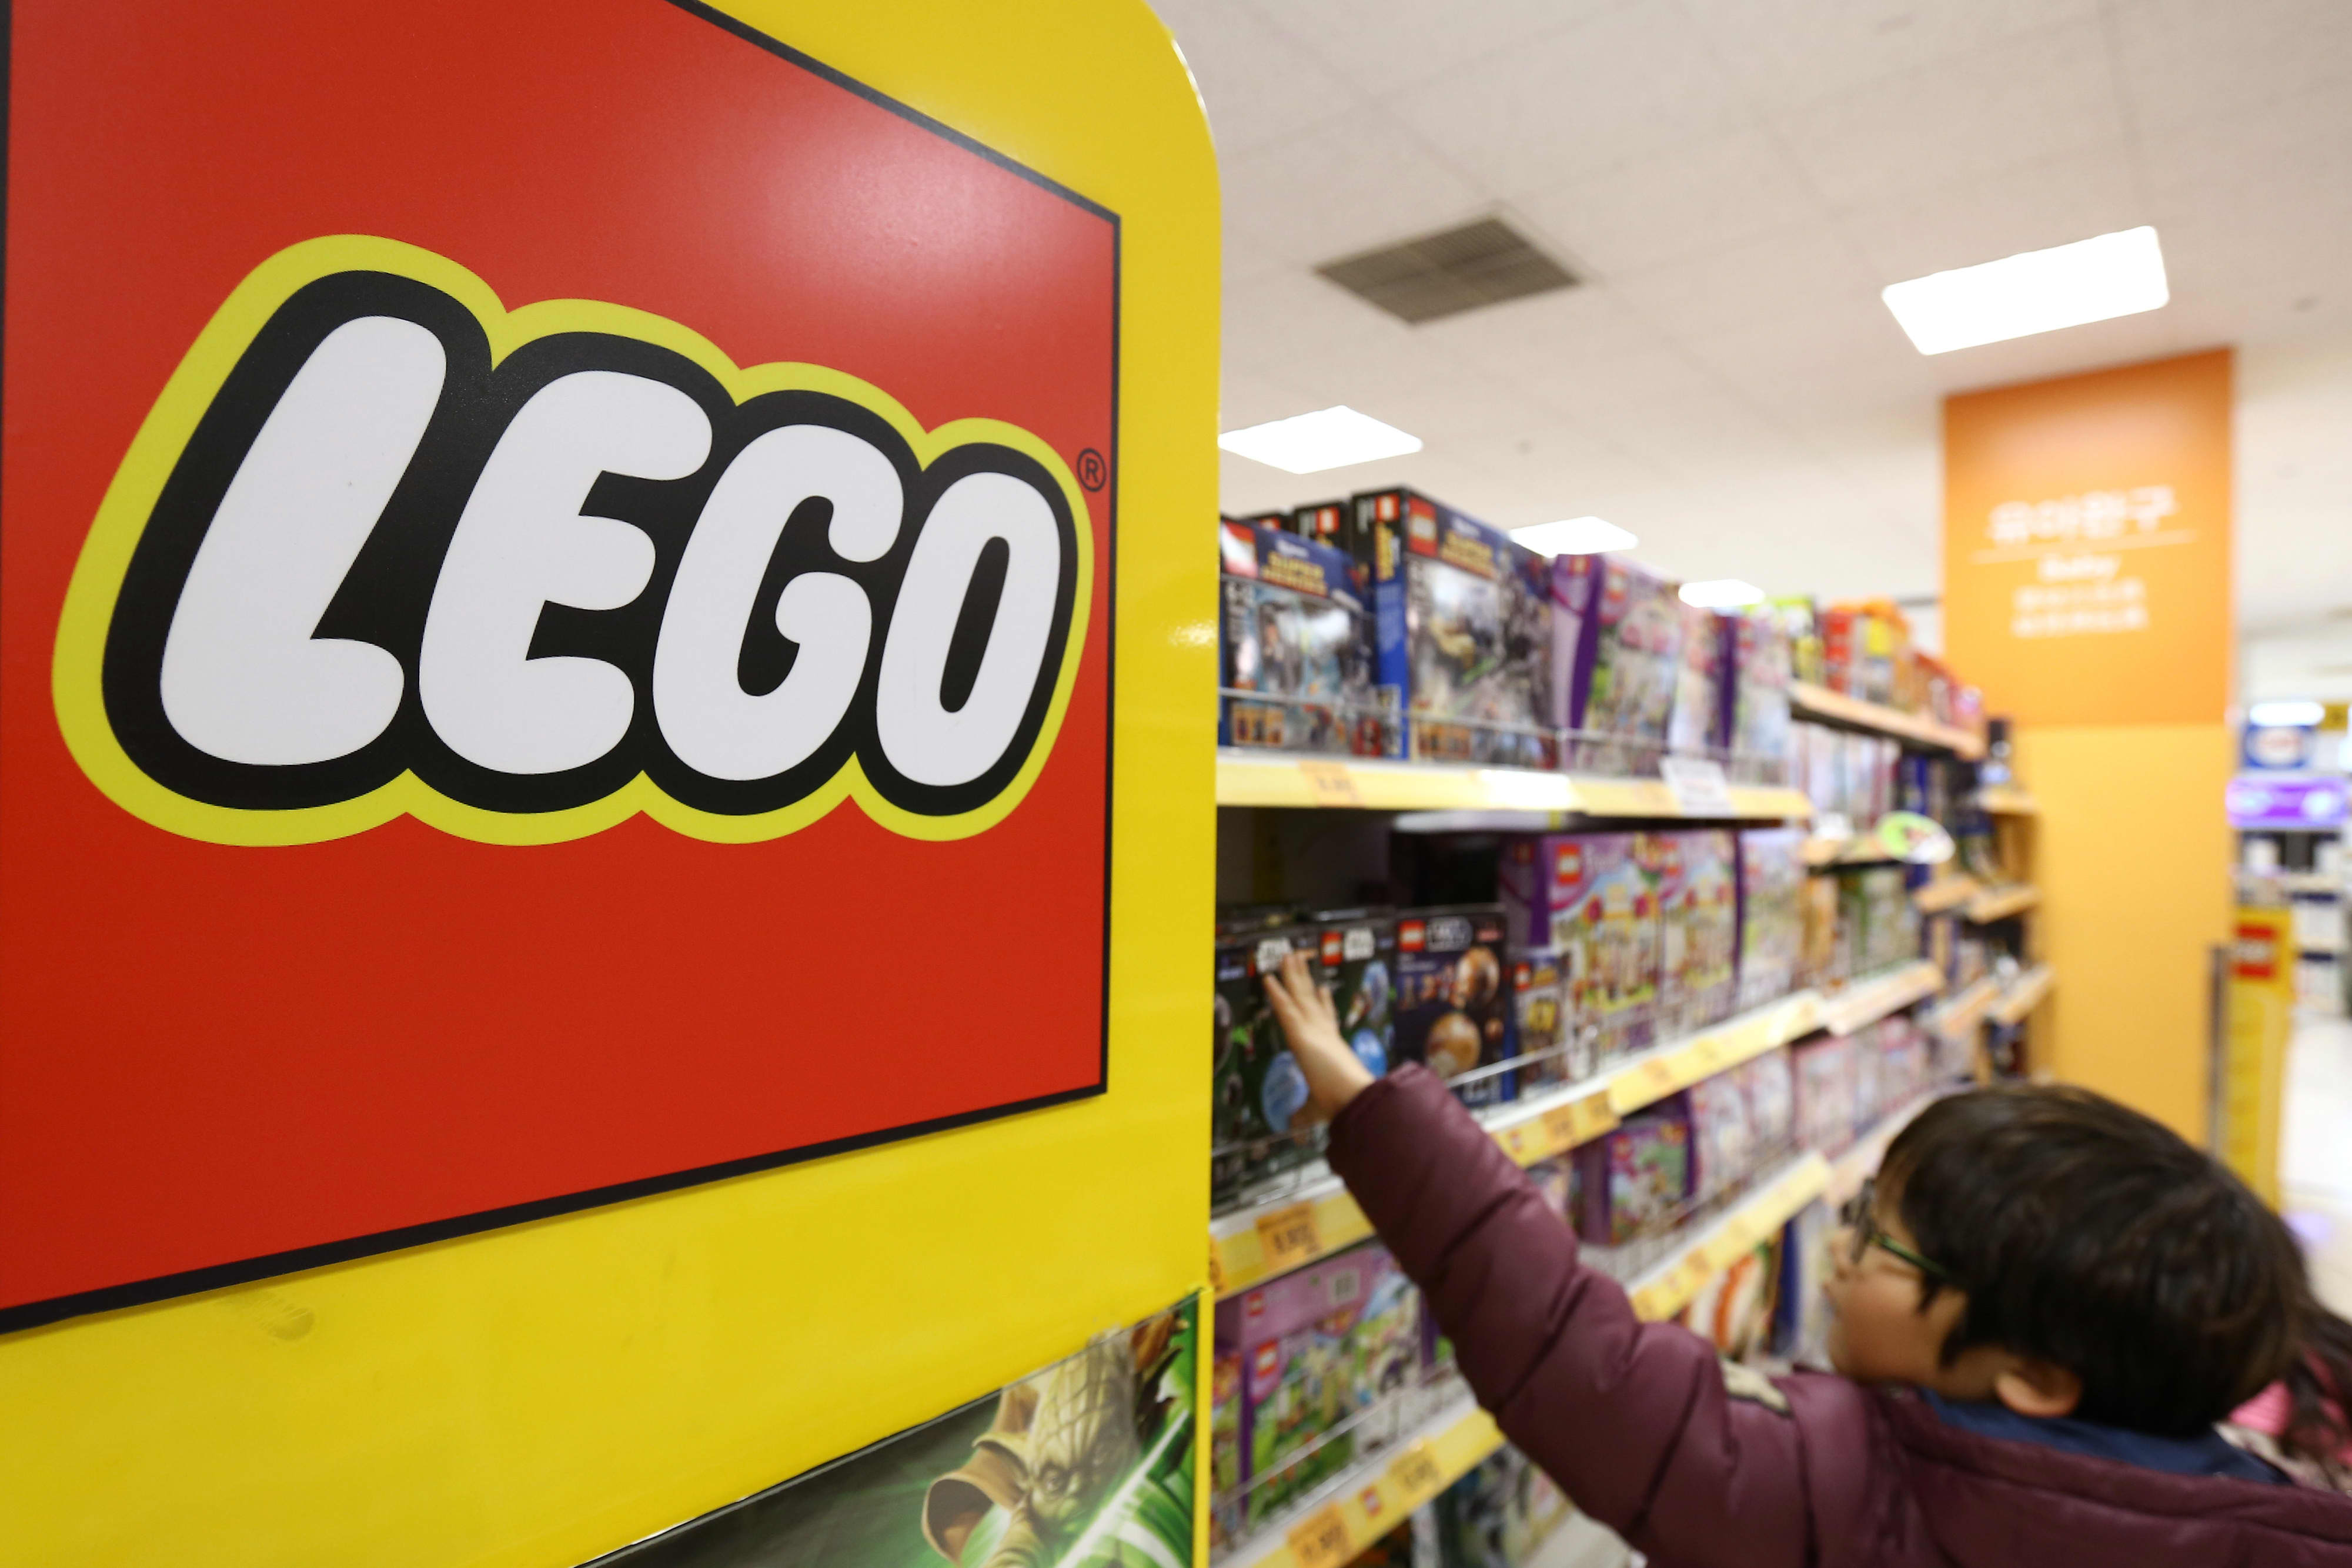 Lego the world's most reputable company, Disney follows